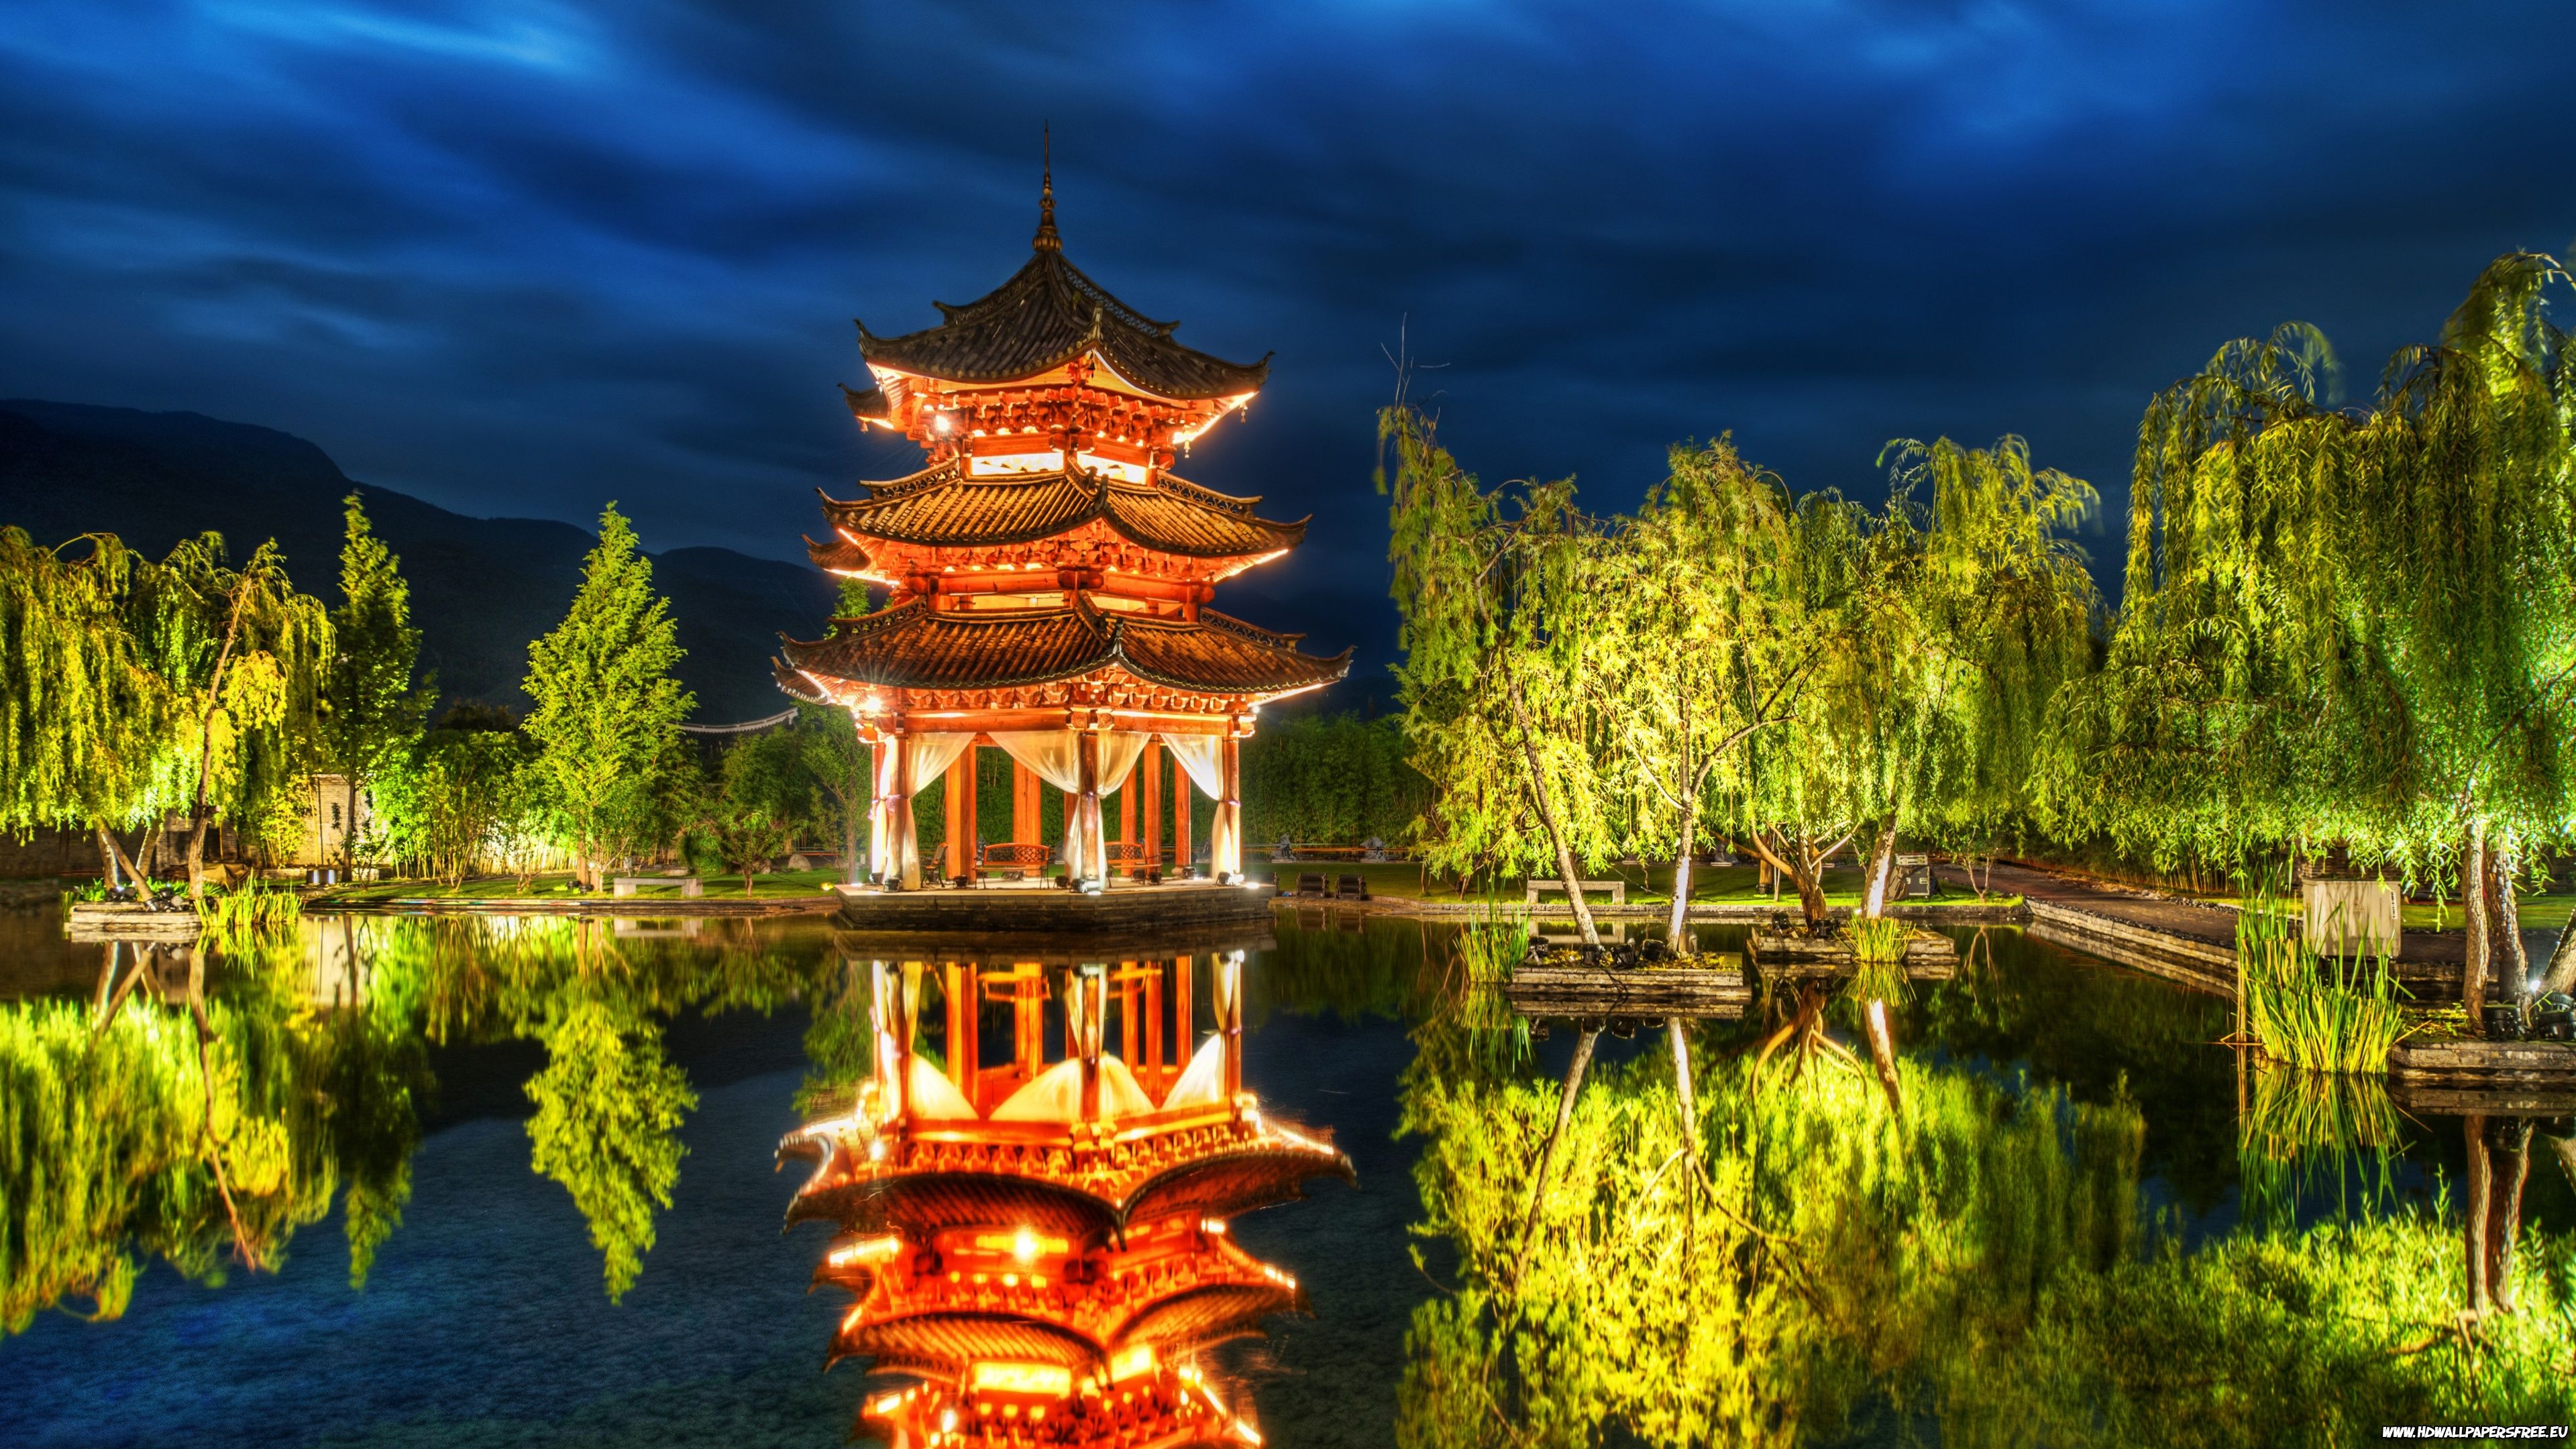 aplicativo de wallpaper,nature,natural landscape,reflection,chinese architecture,landmark